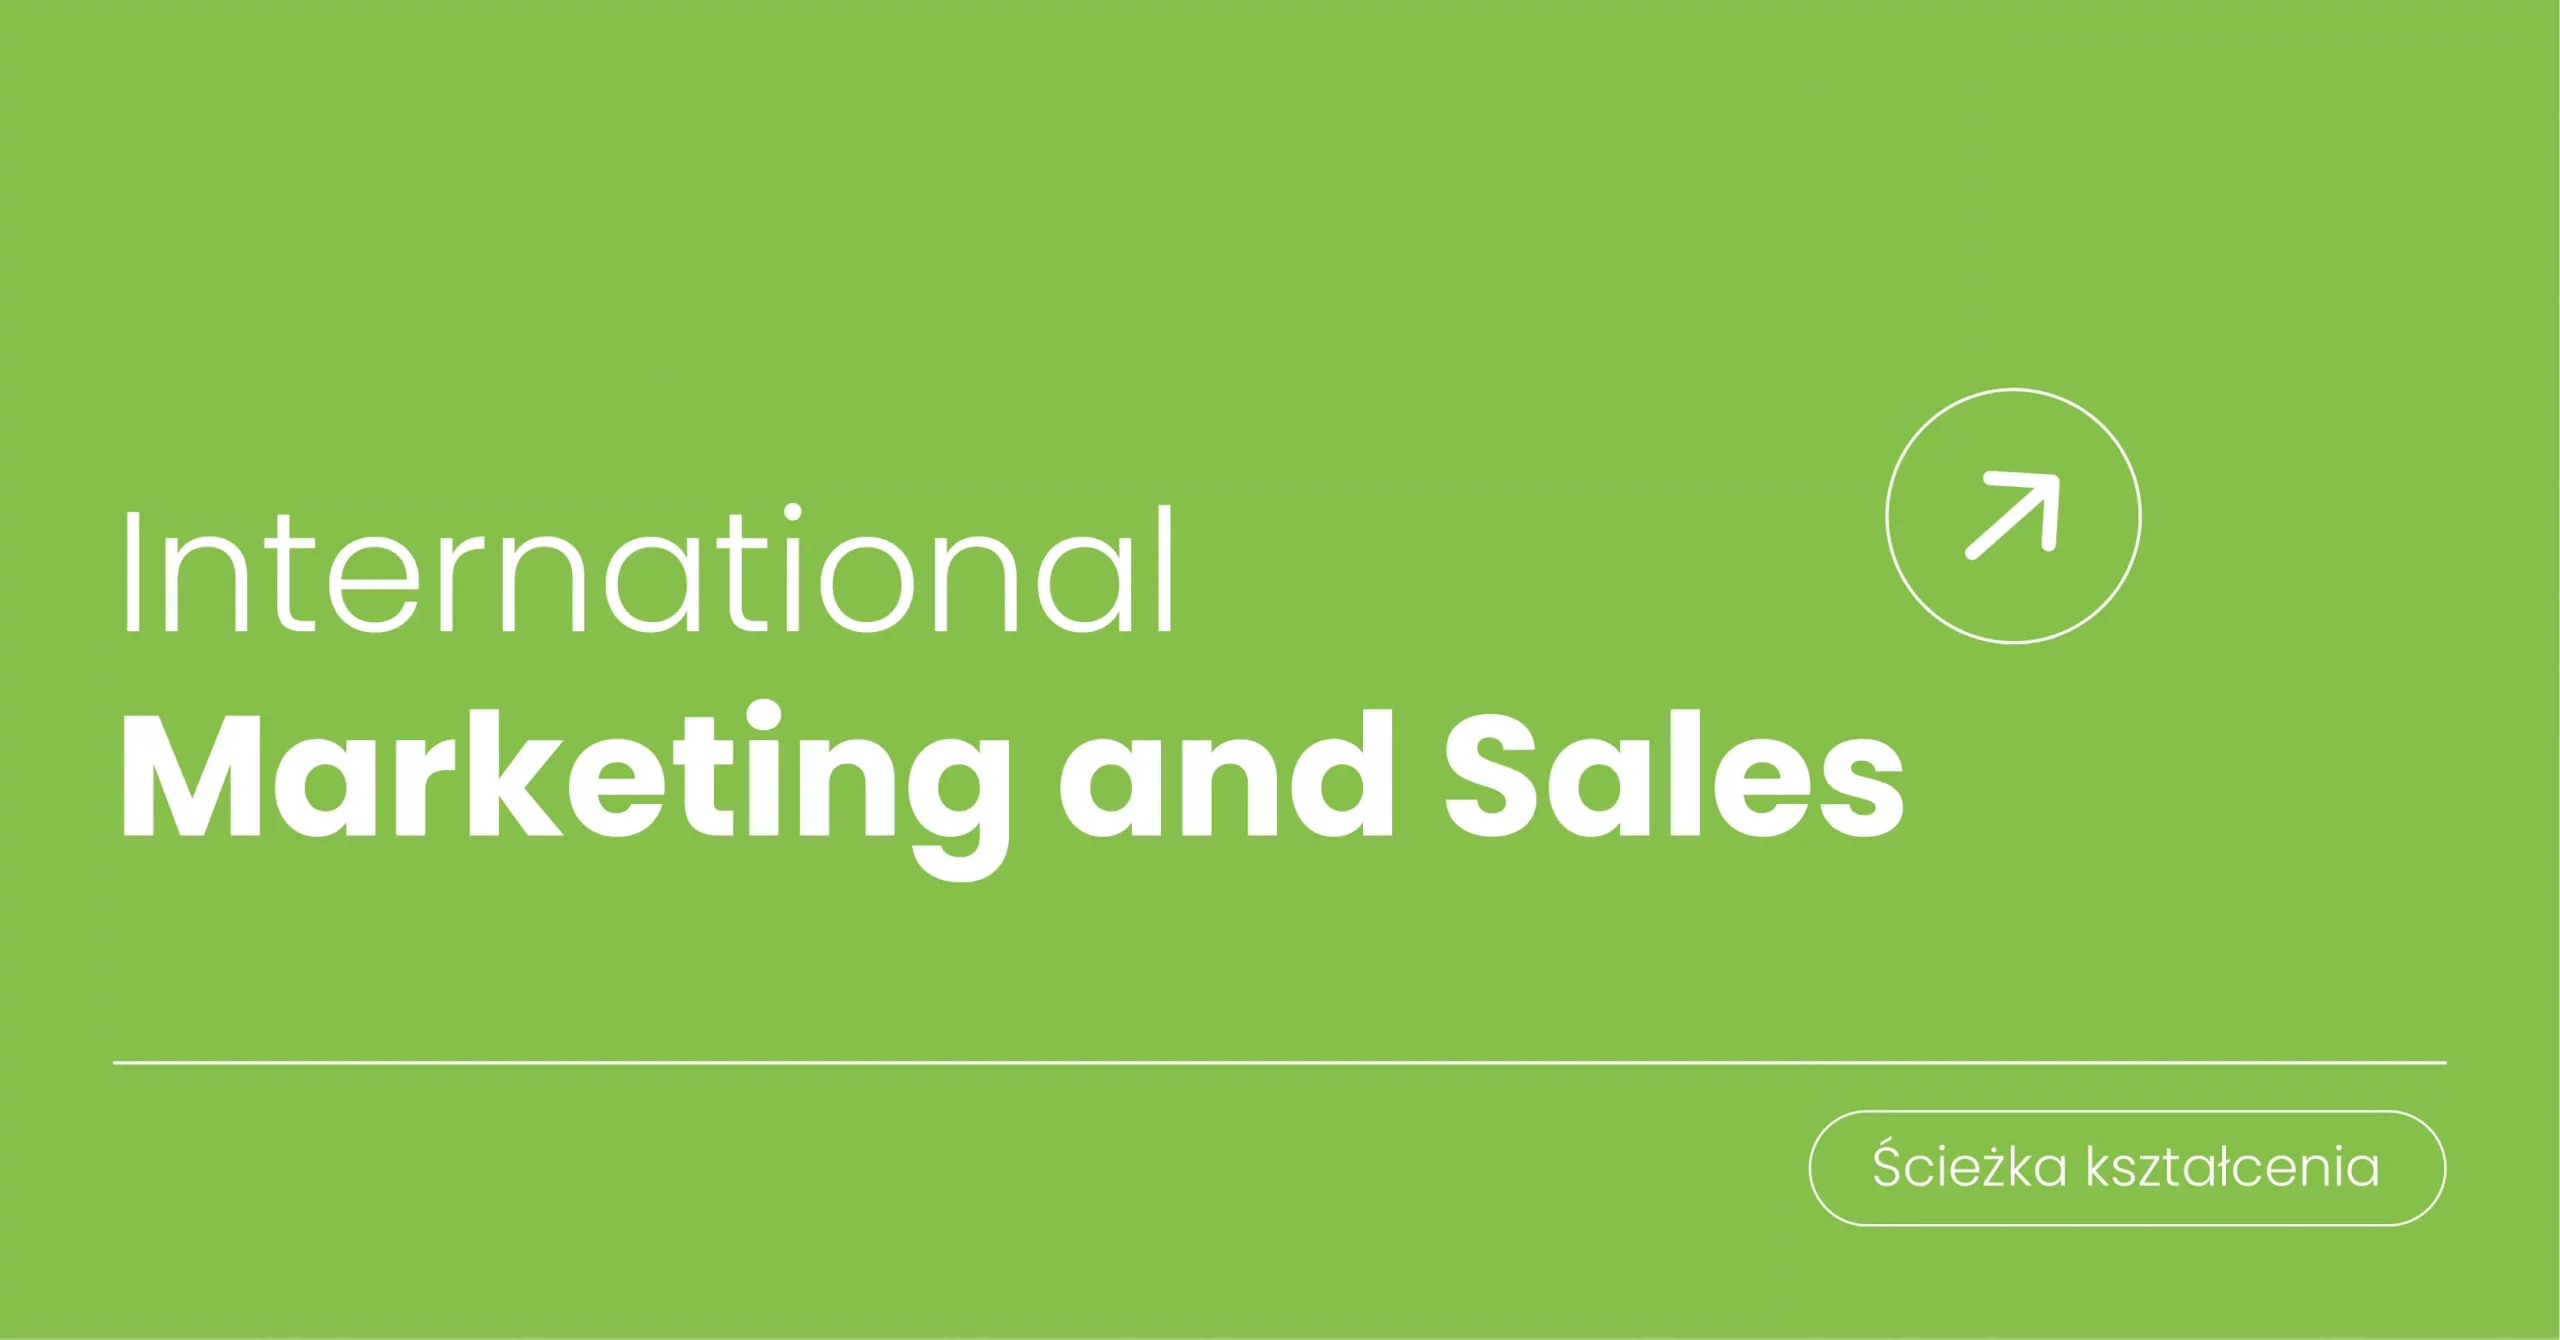 International Marketing and Sales